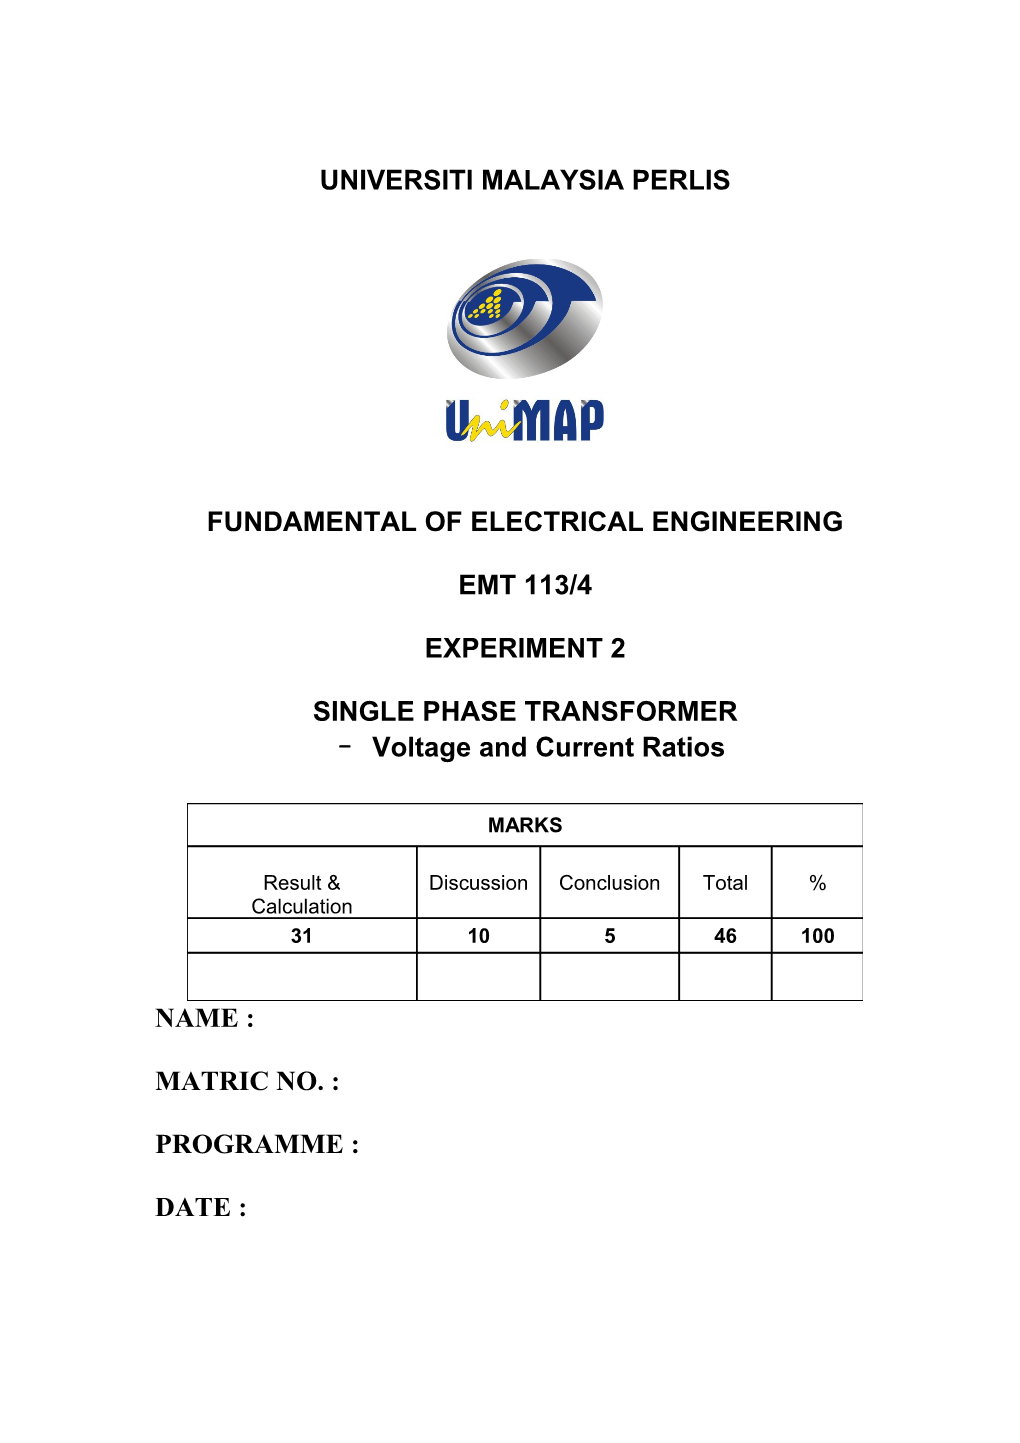 EMT113/4 Single Phase Transformer-Voltage and Current Ratios